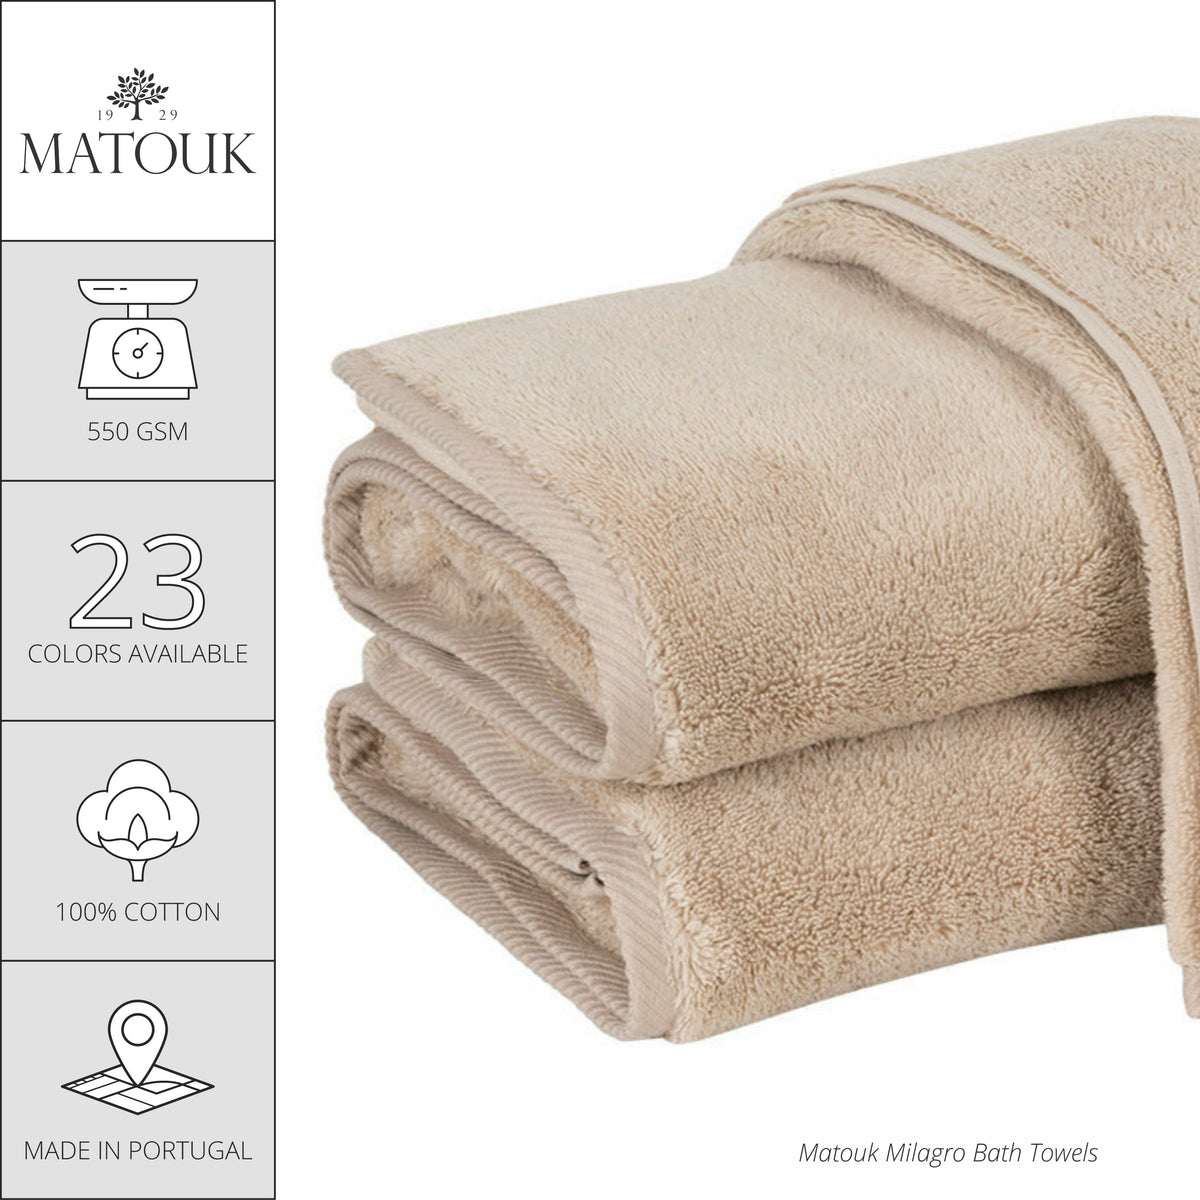 Matouk Milagro Bath Towels and Mats - Platinum